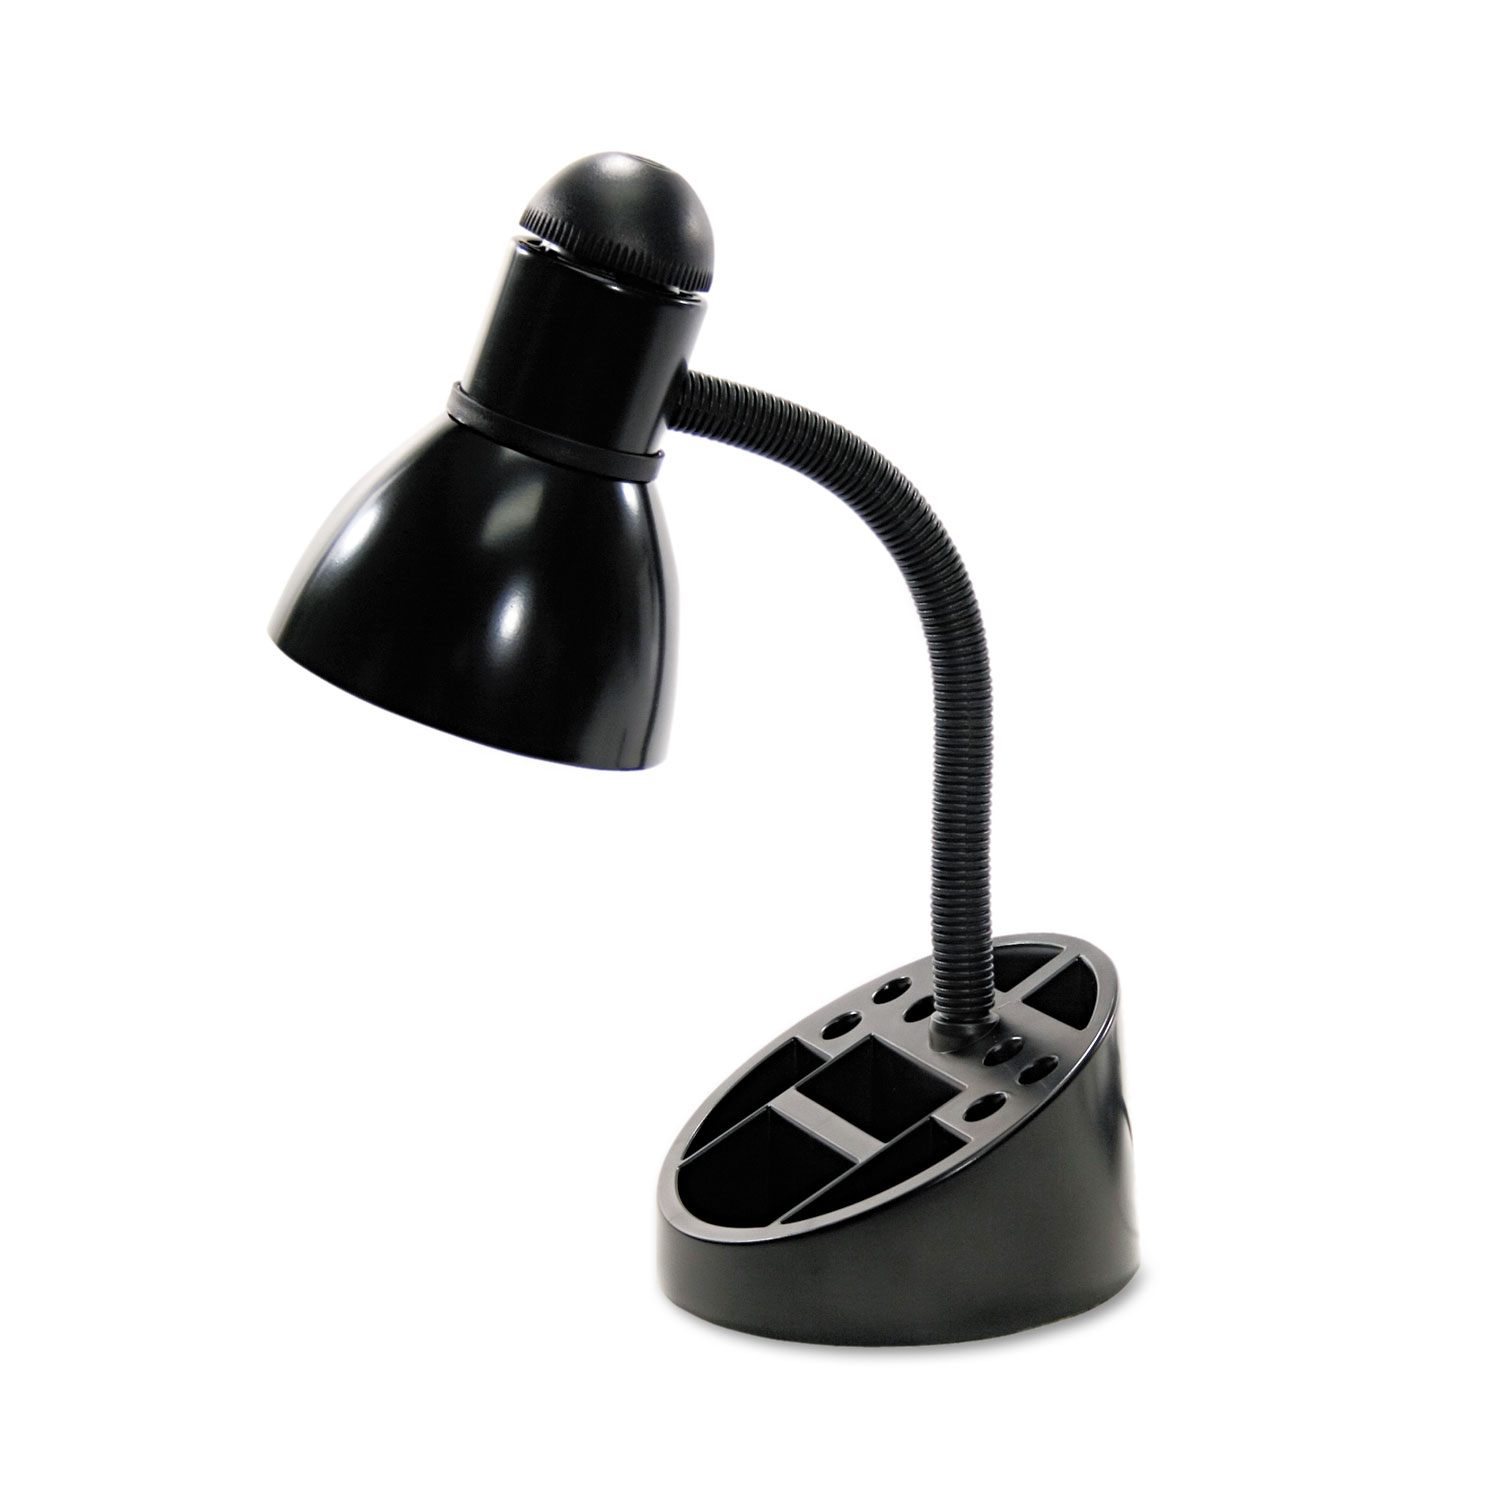 Organizer Incandescent Desk Lamp, 16 High, Black